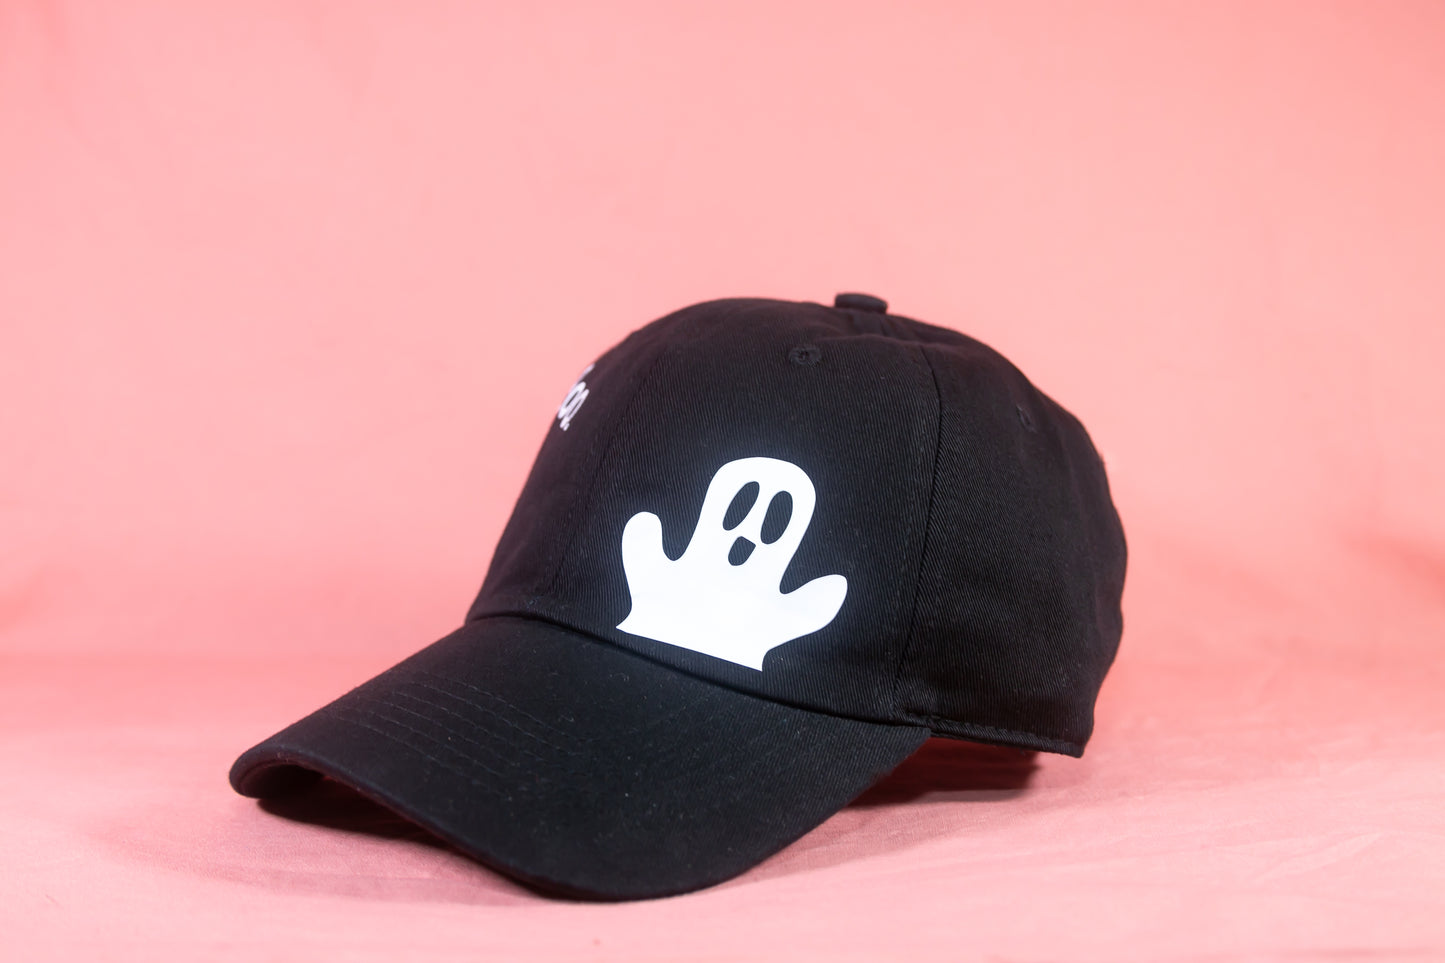 Boo Ghost Black Baseball Cap